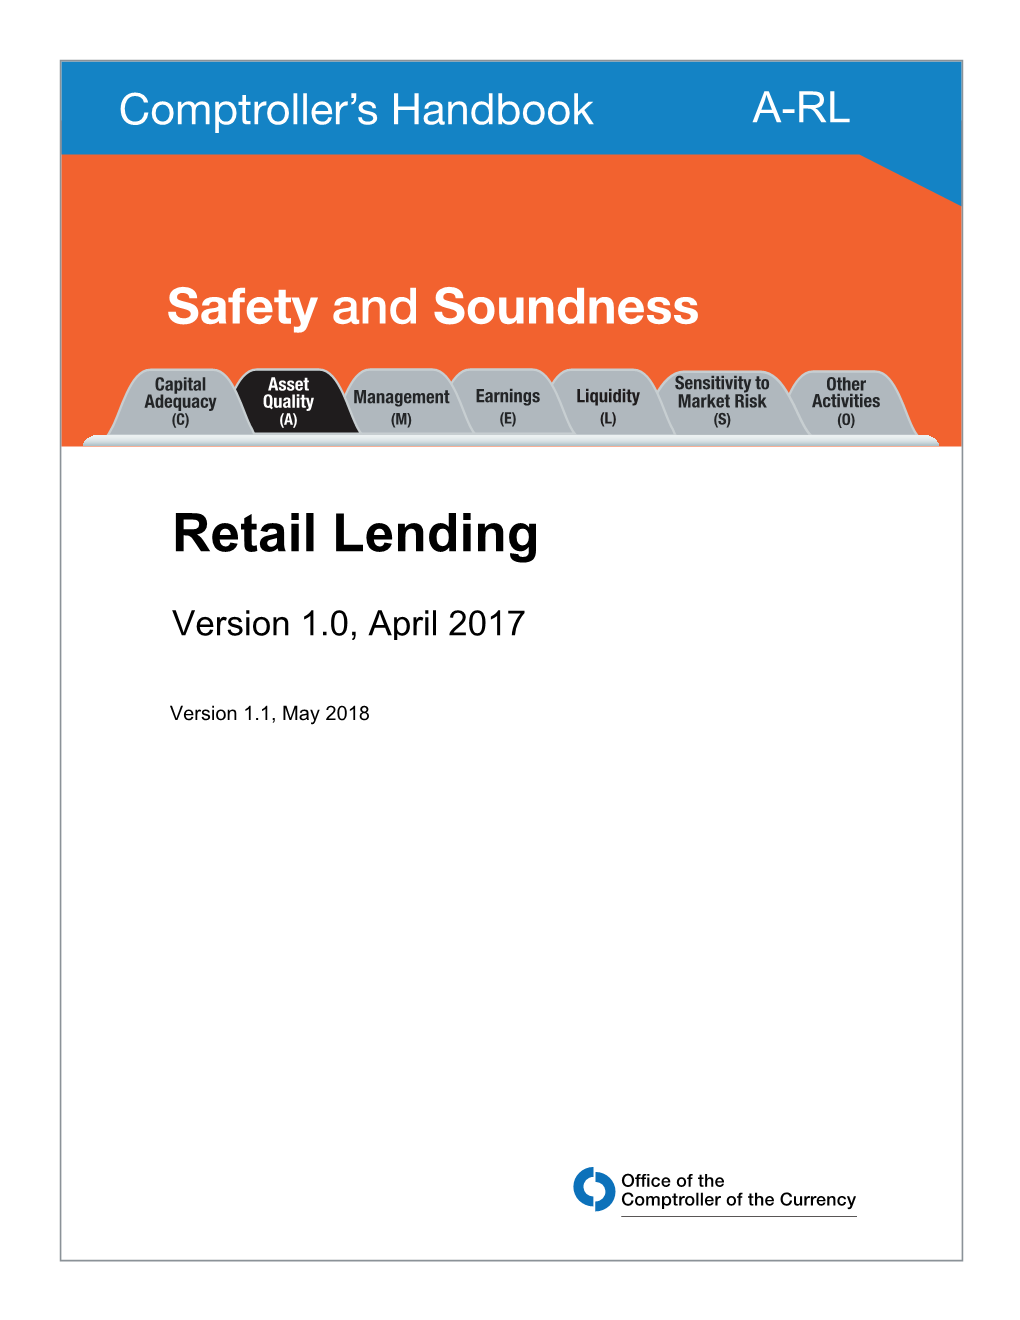 Retail Lending, Comptroller's Handbook